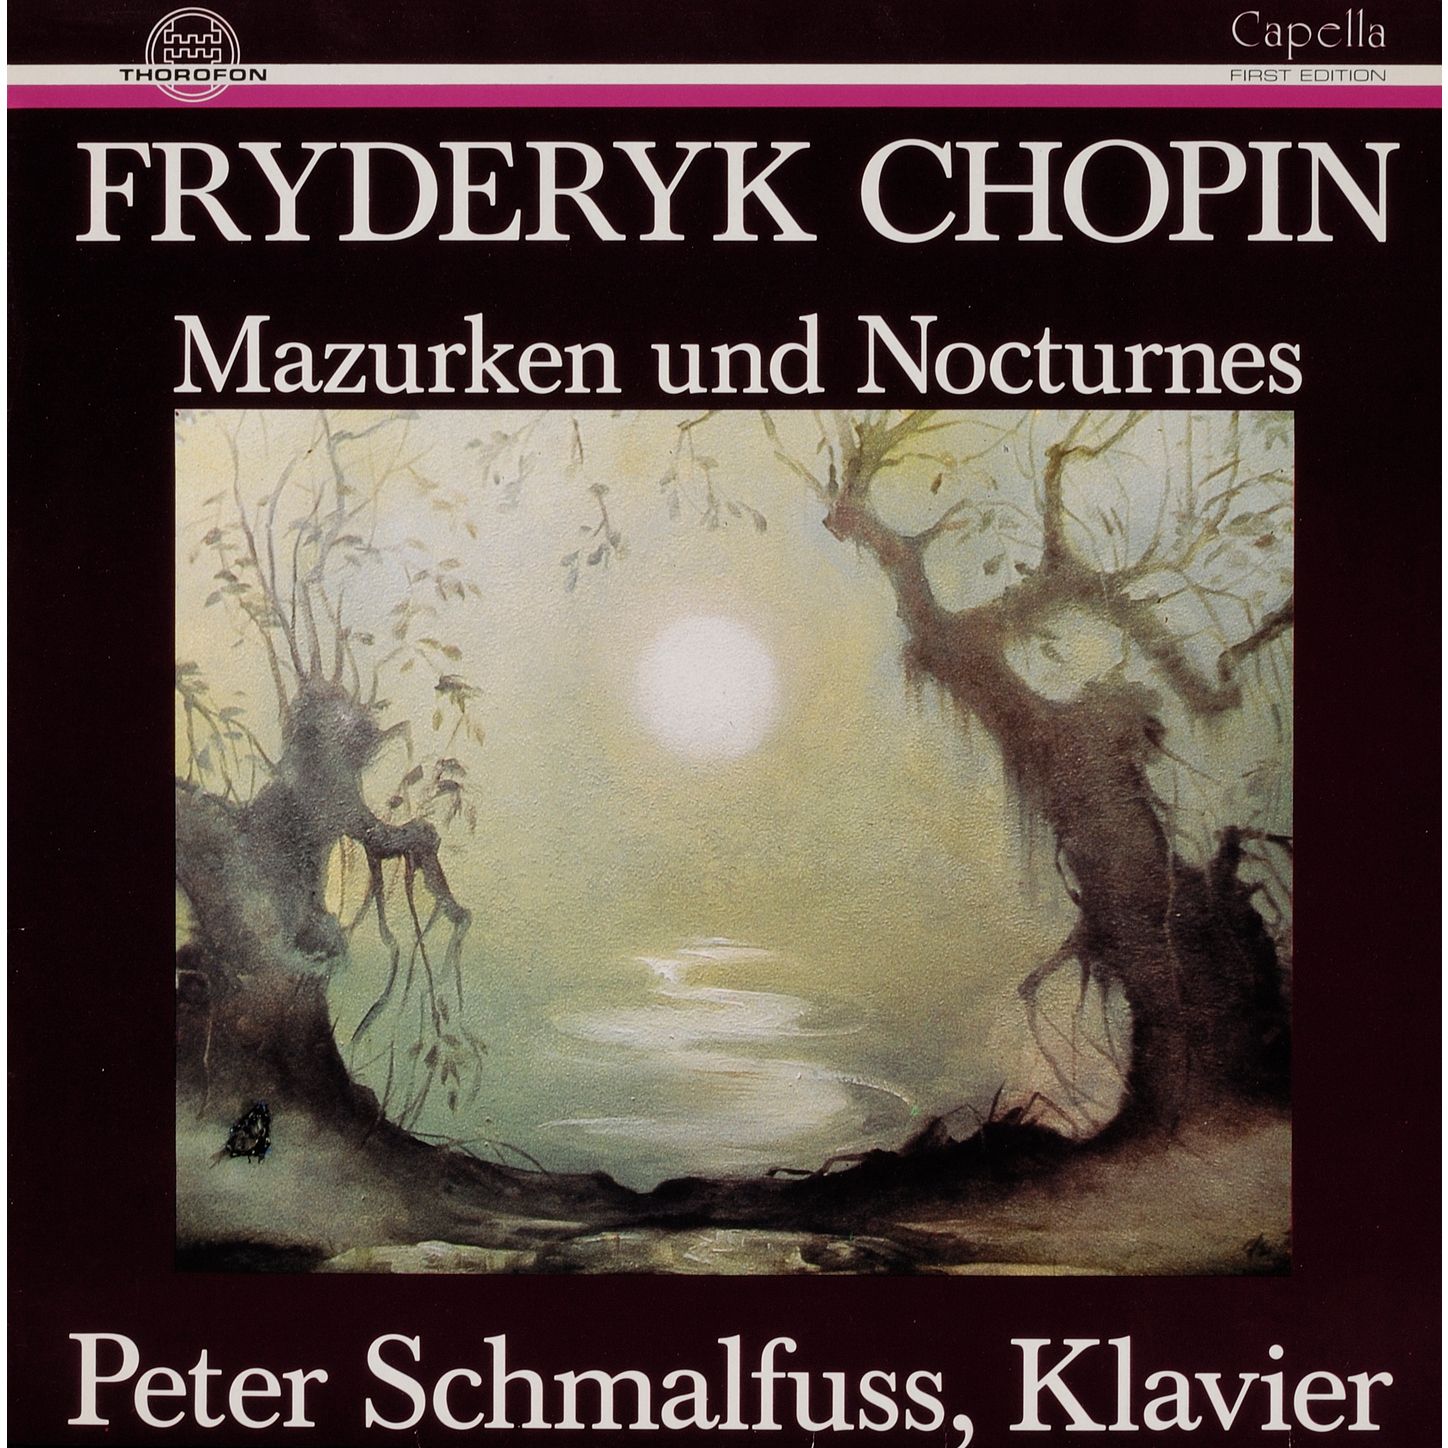 Zwei Nocturnes fü r Klavier in F Minor, Op. 55, No. 1